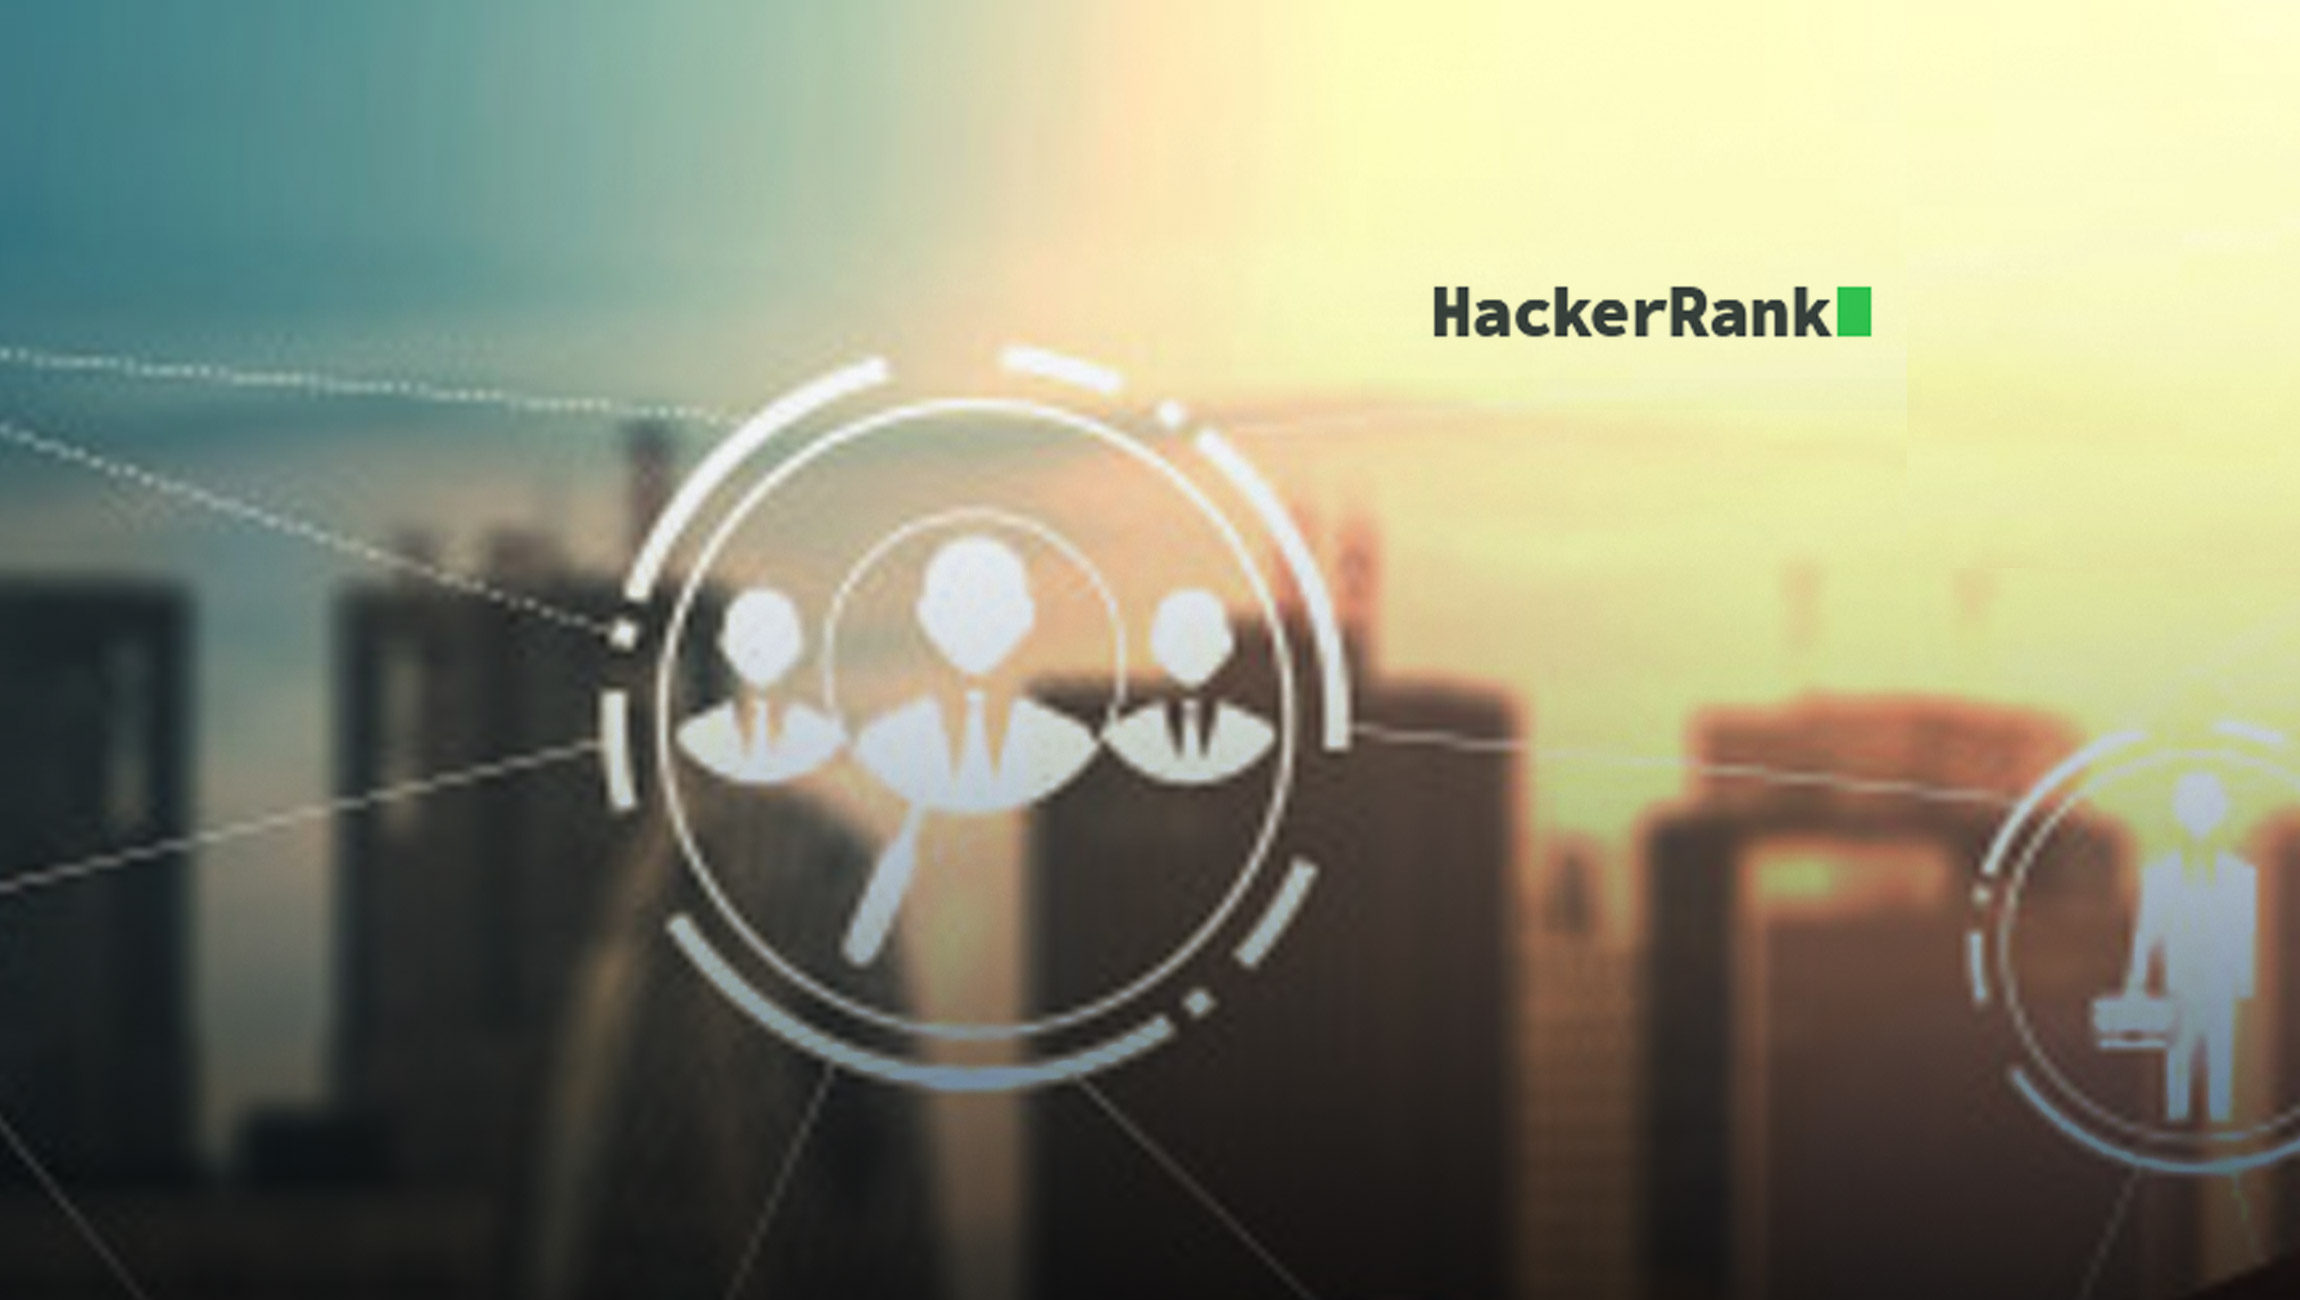 Hackerrank Adds Hbcu Day To Fall Virtual Career Fair - roblox hackerrank